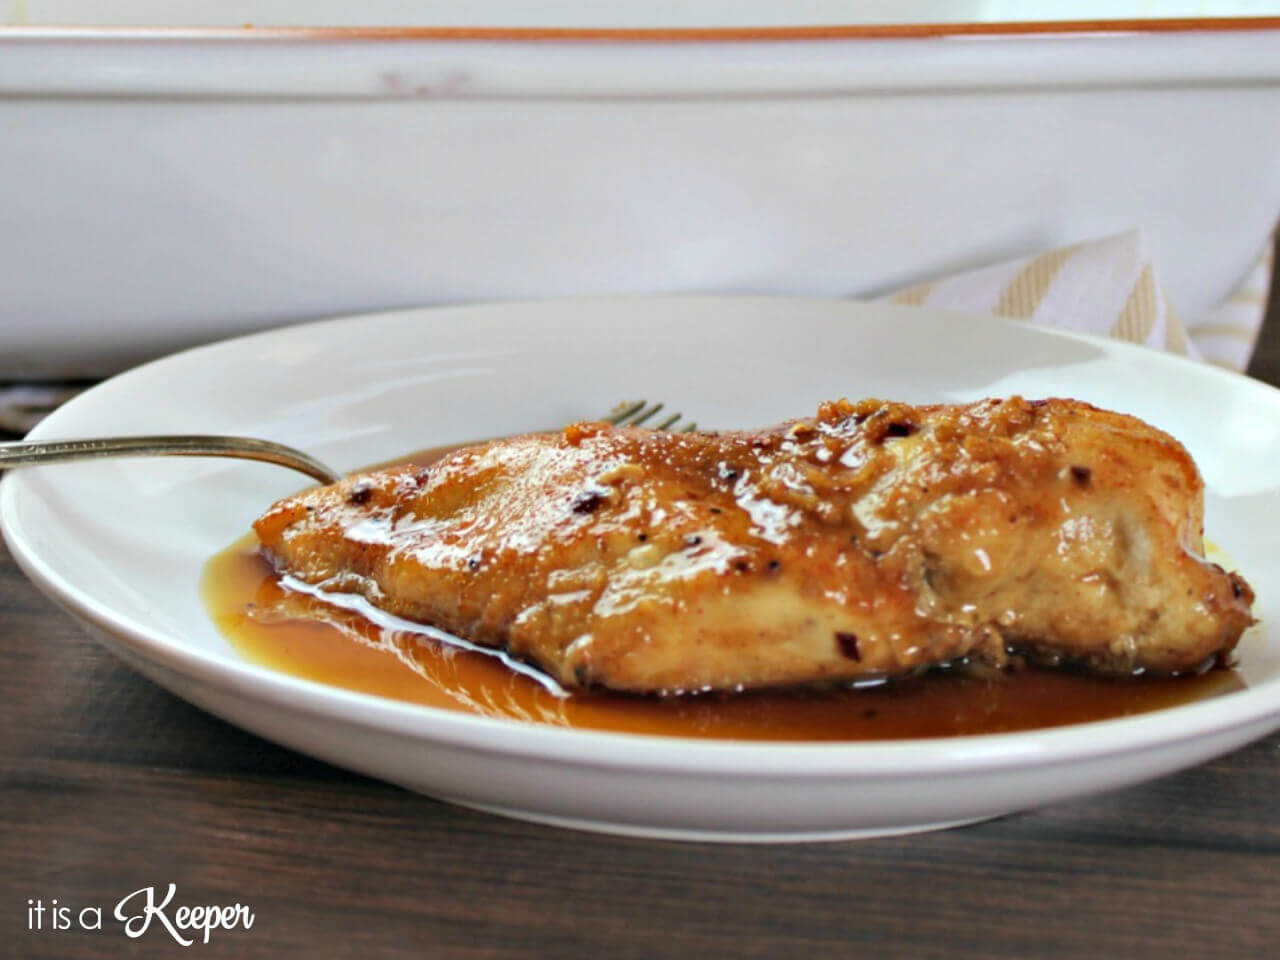 Honey Garlic Baked Chicken Recipe - this is an easy dinner idea